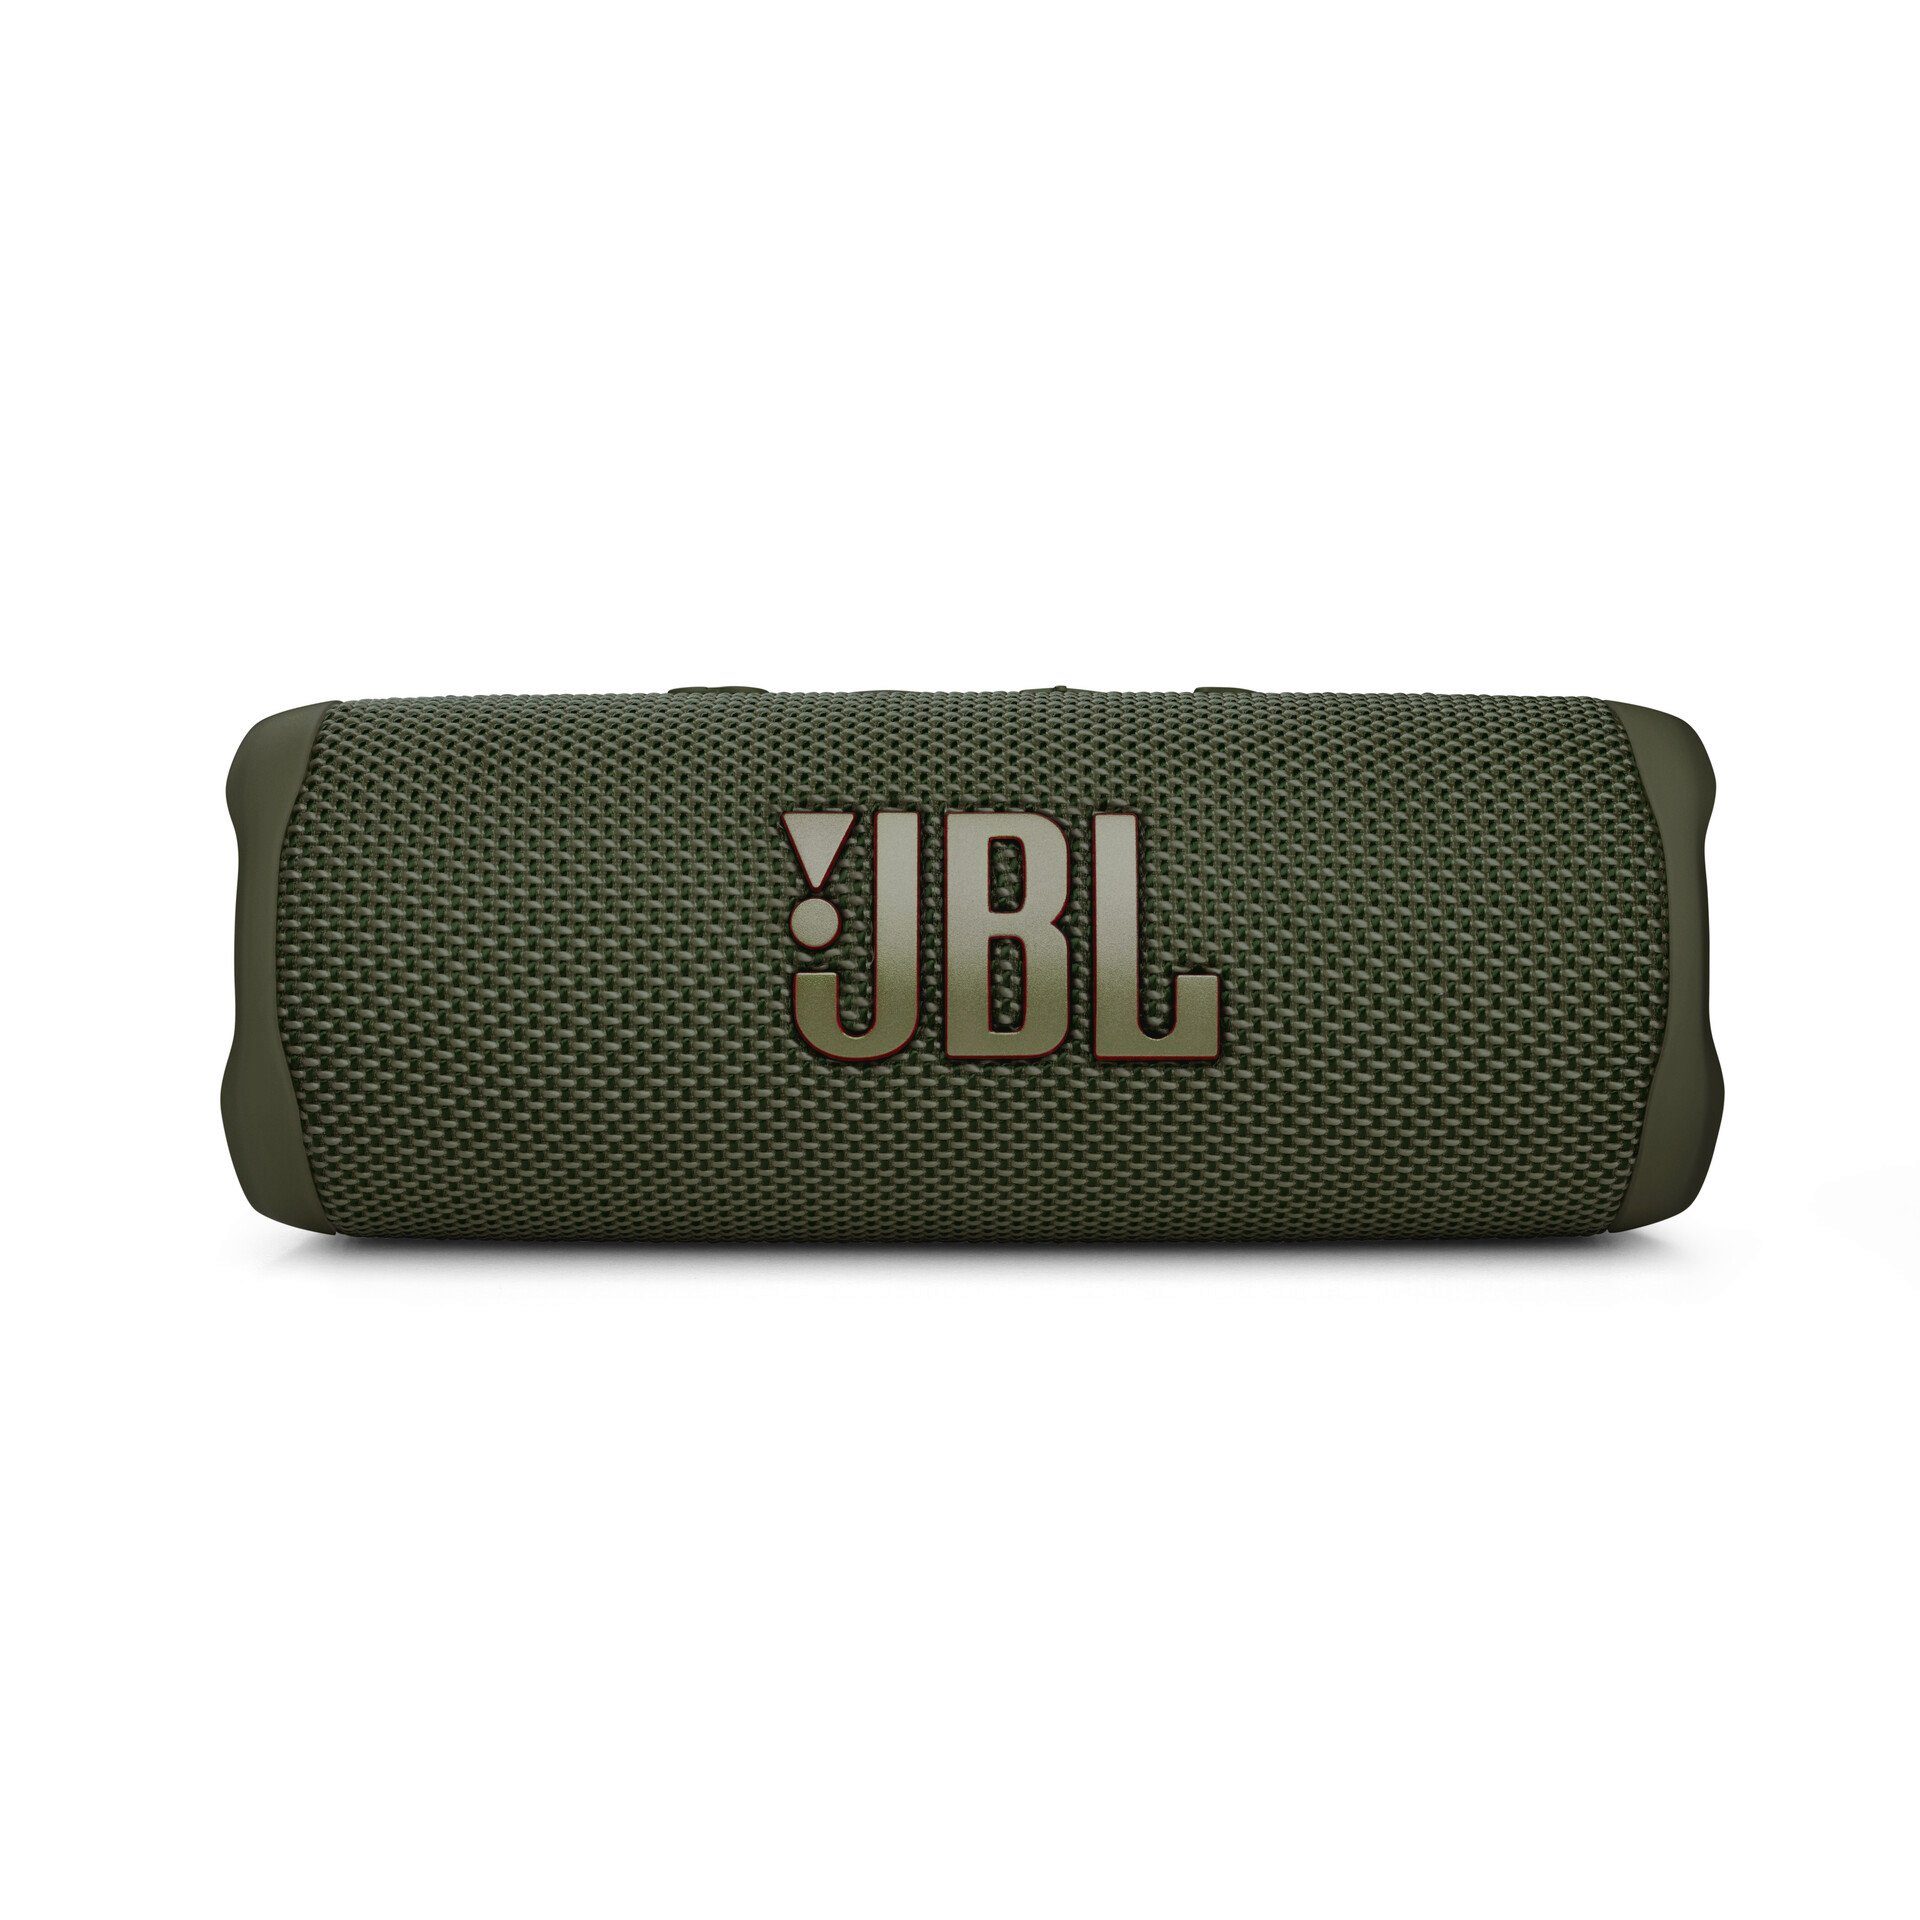 JBL FLIP 6 Lautsprecher (Bluetooth, 30 grün W)